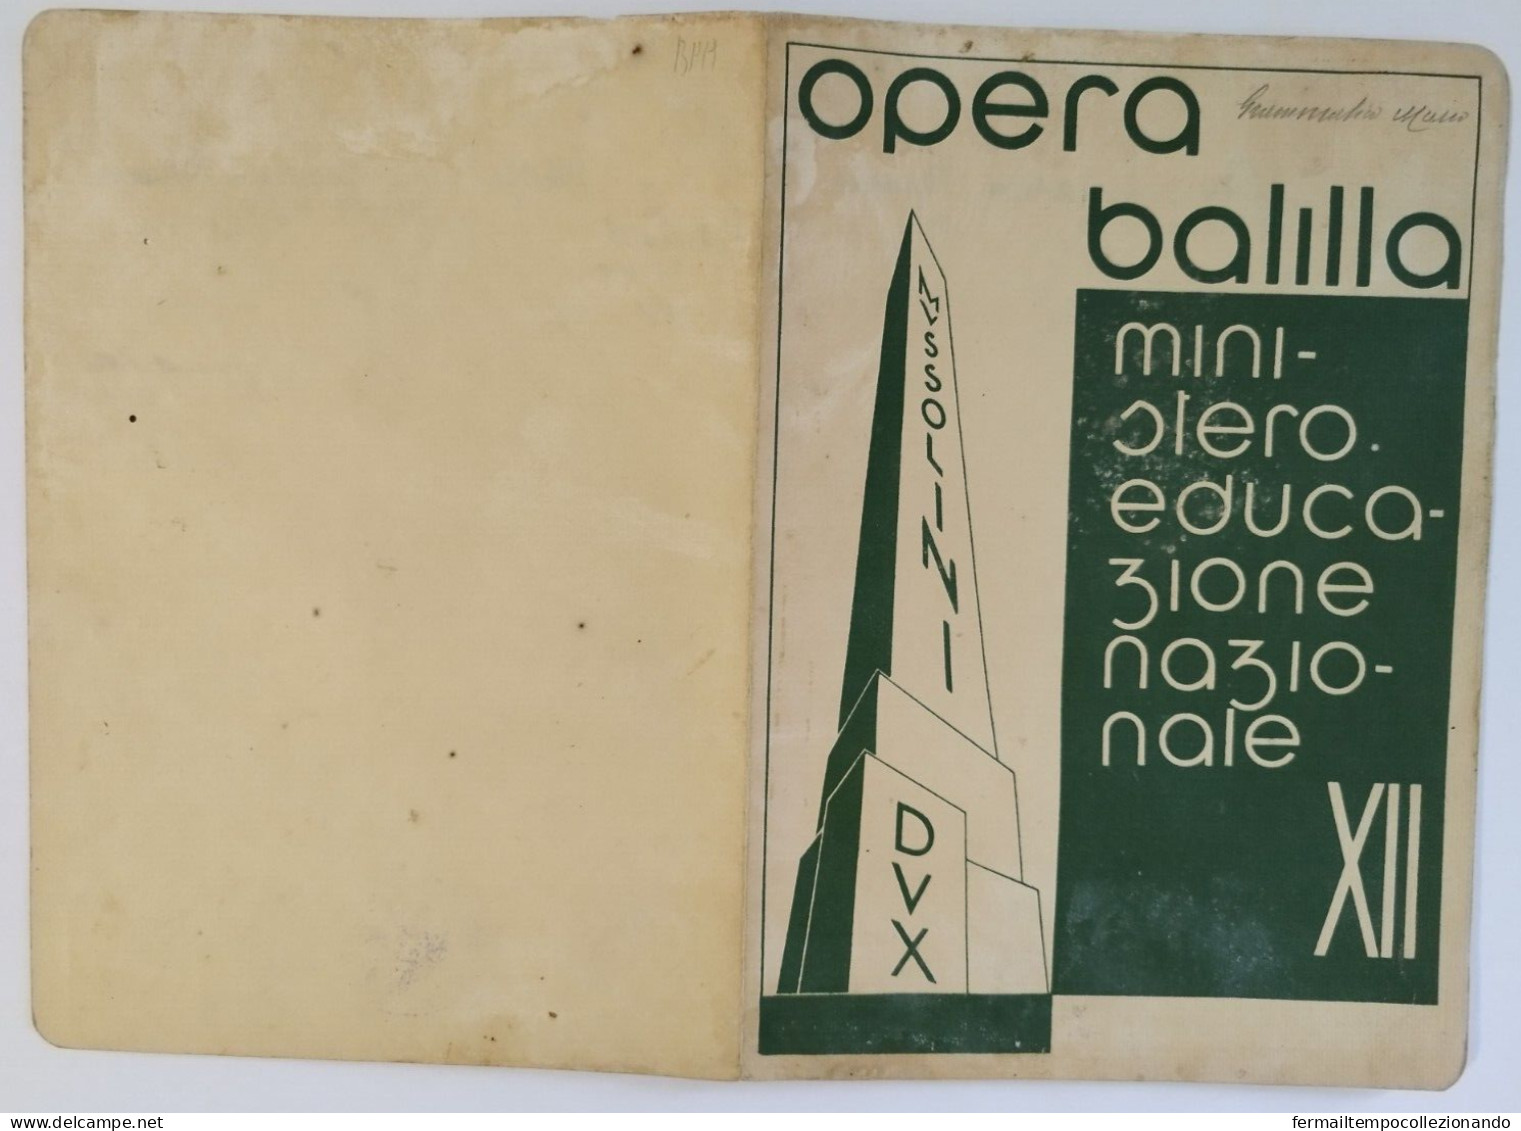 Bp19 Pagella Fascista Opera Balilla Ministero Educazione Nazionale Roma 1934 - Diplômes & Bulletins Scolaires